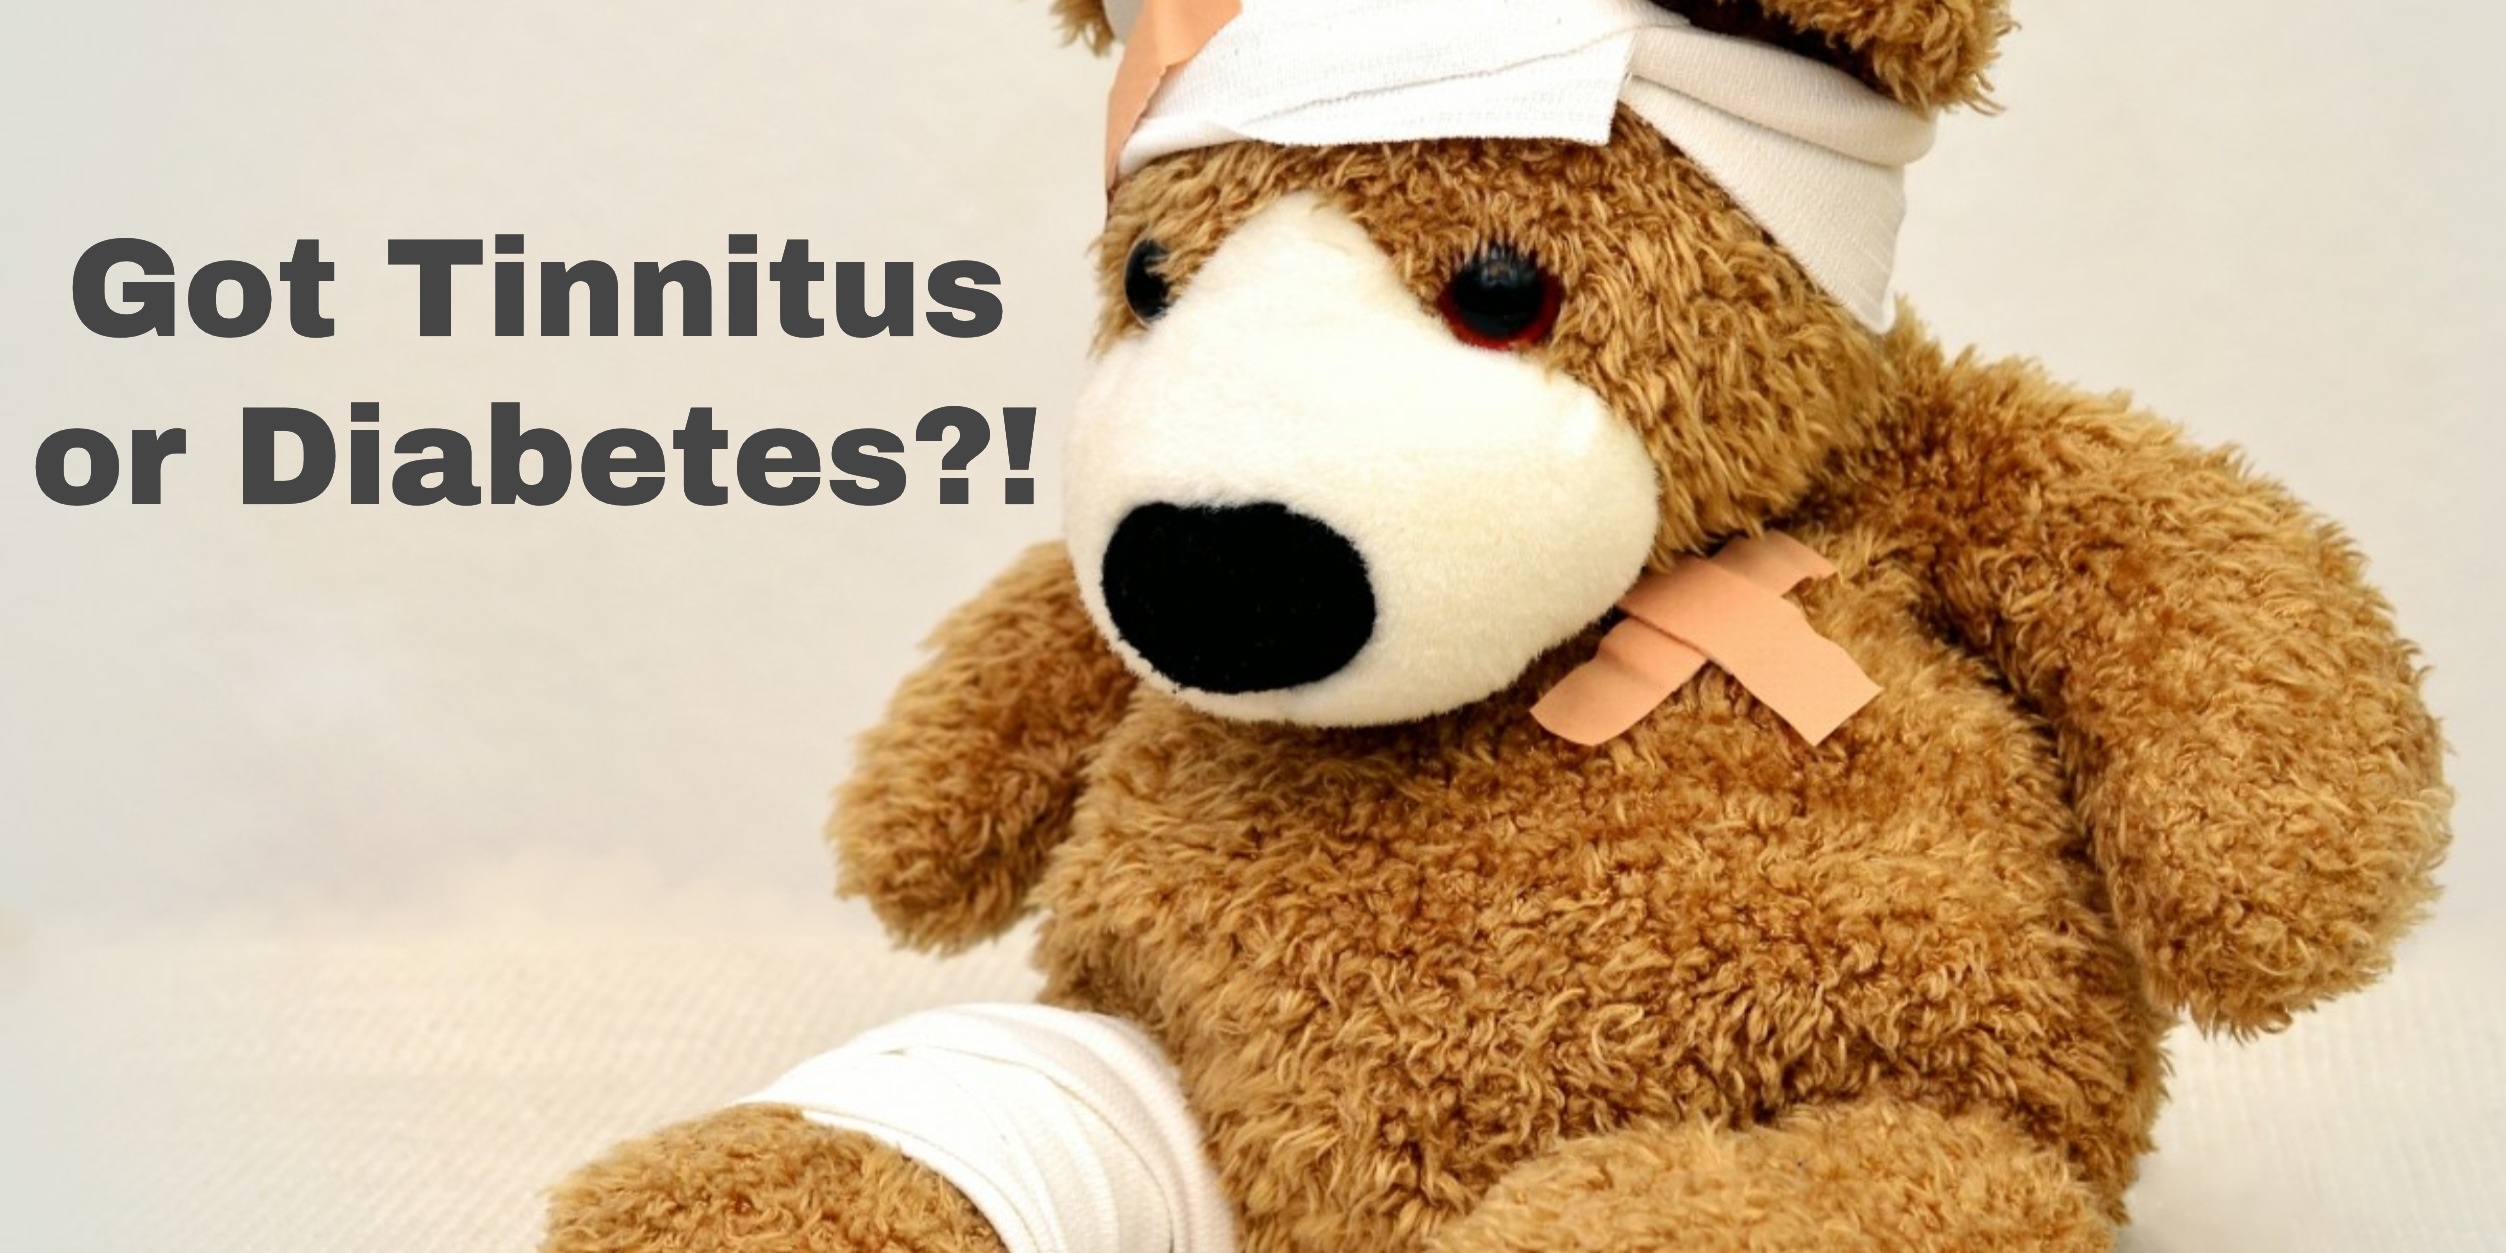 Got Tinnitus or Diabetes?!  Read more…